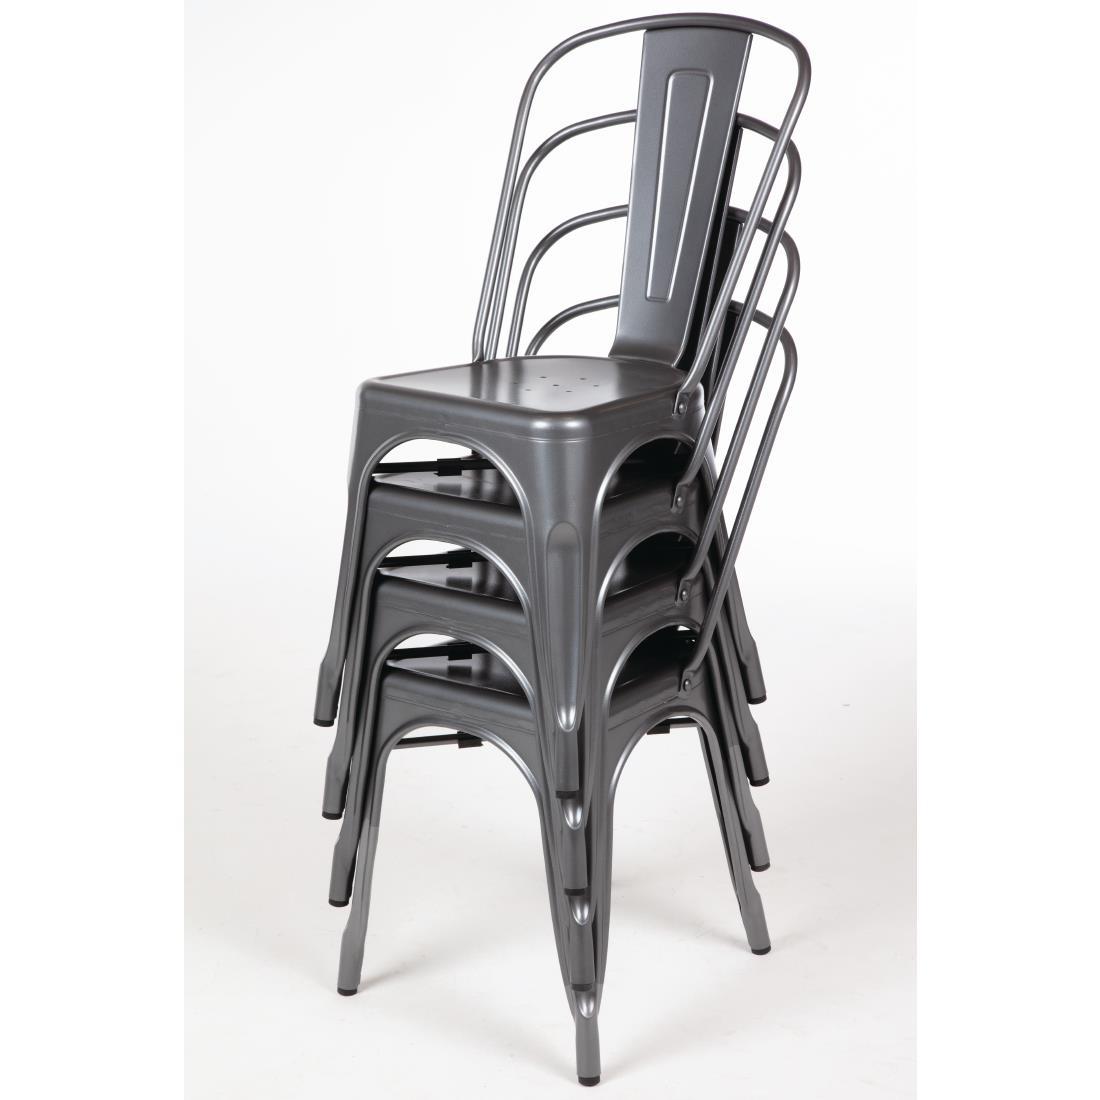 Bolero Bistro Steel Side Chairs Gun Metal Grey (Pack of 4) - GL329  - 7